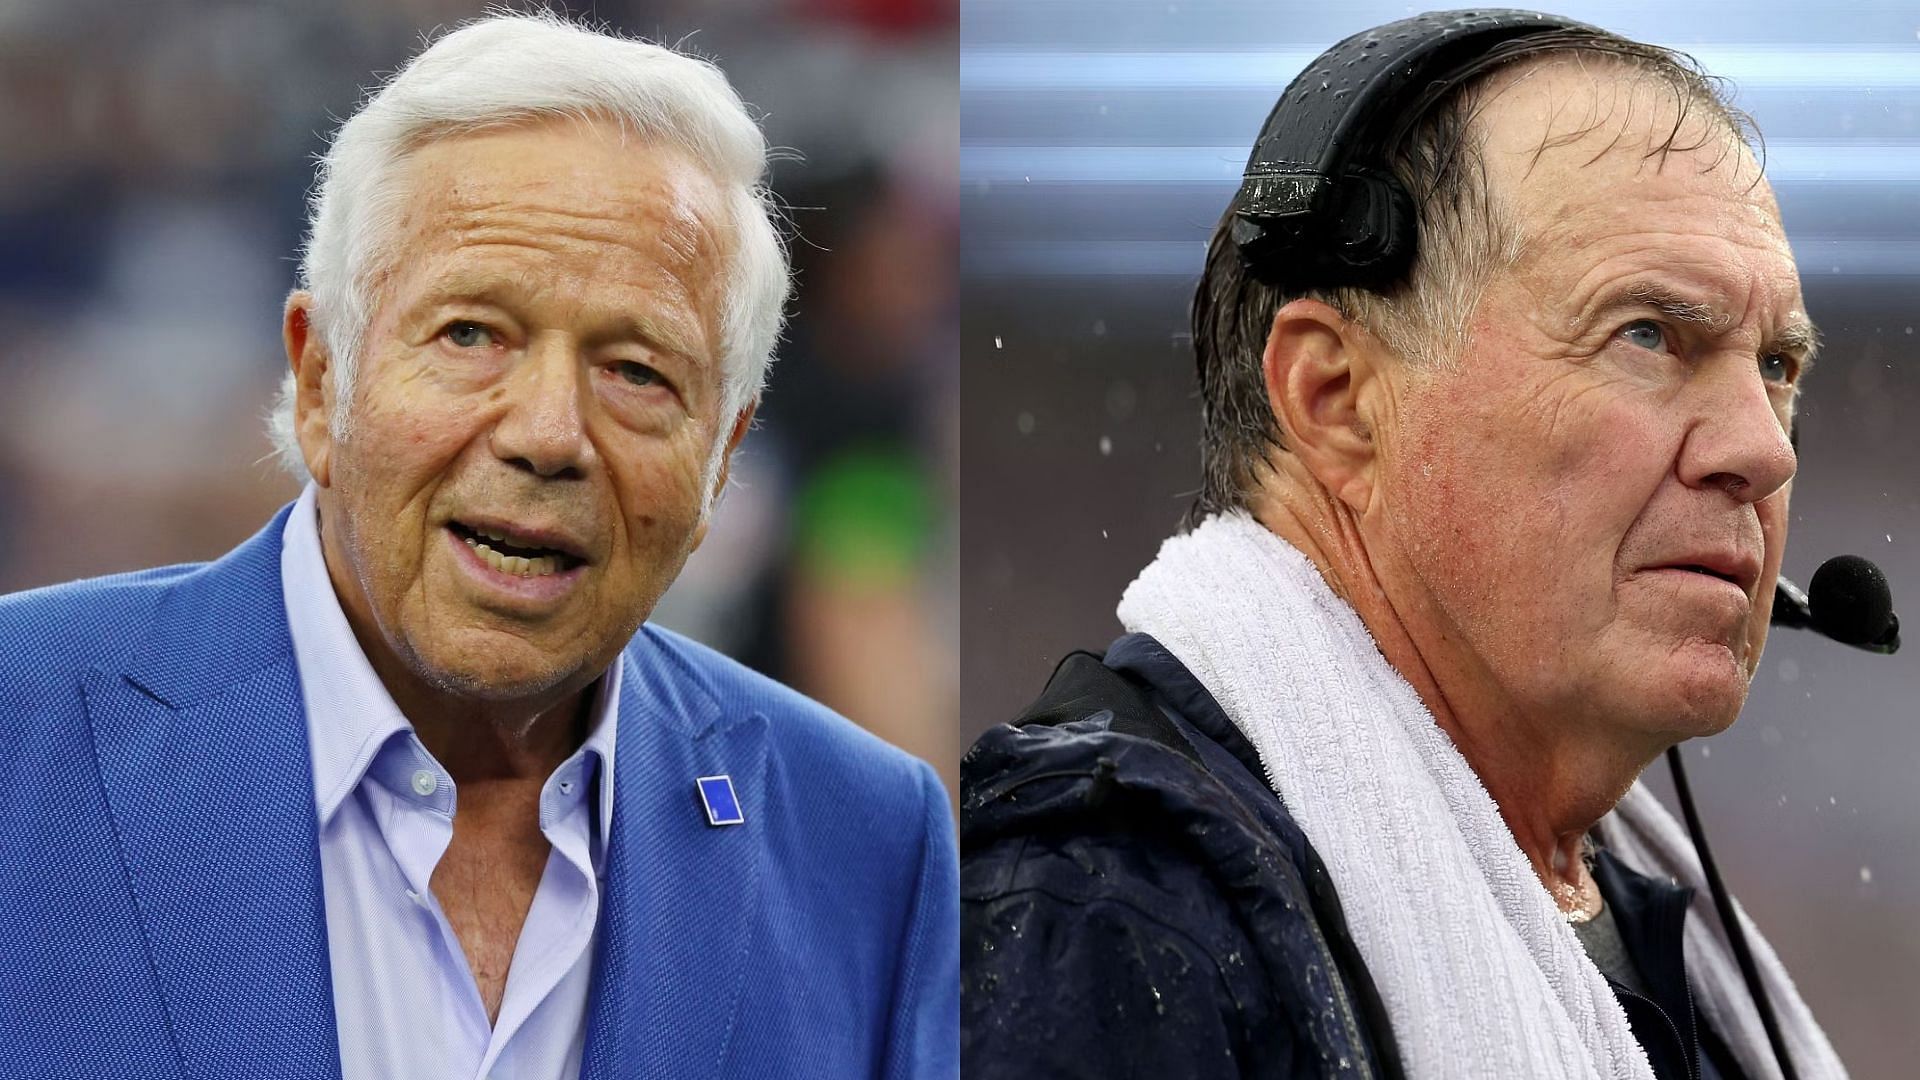 New England Patriots owner Robert Kraft and head coach Bill Belichick